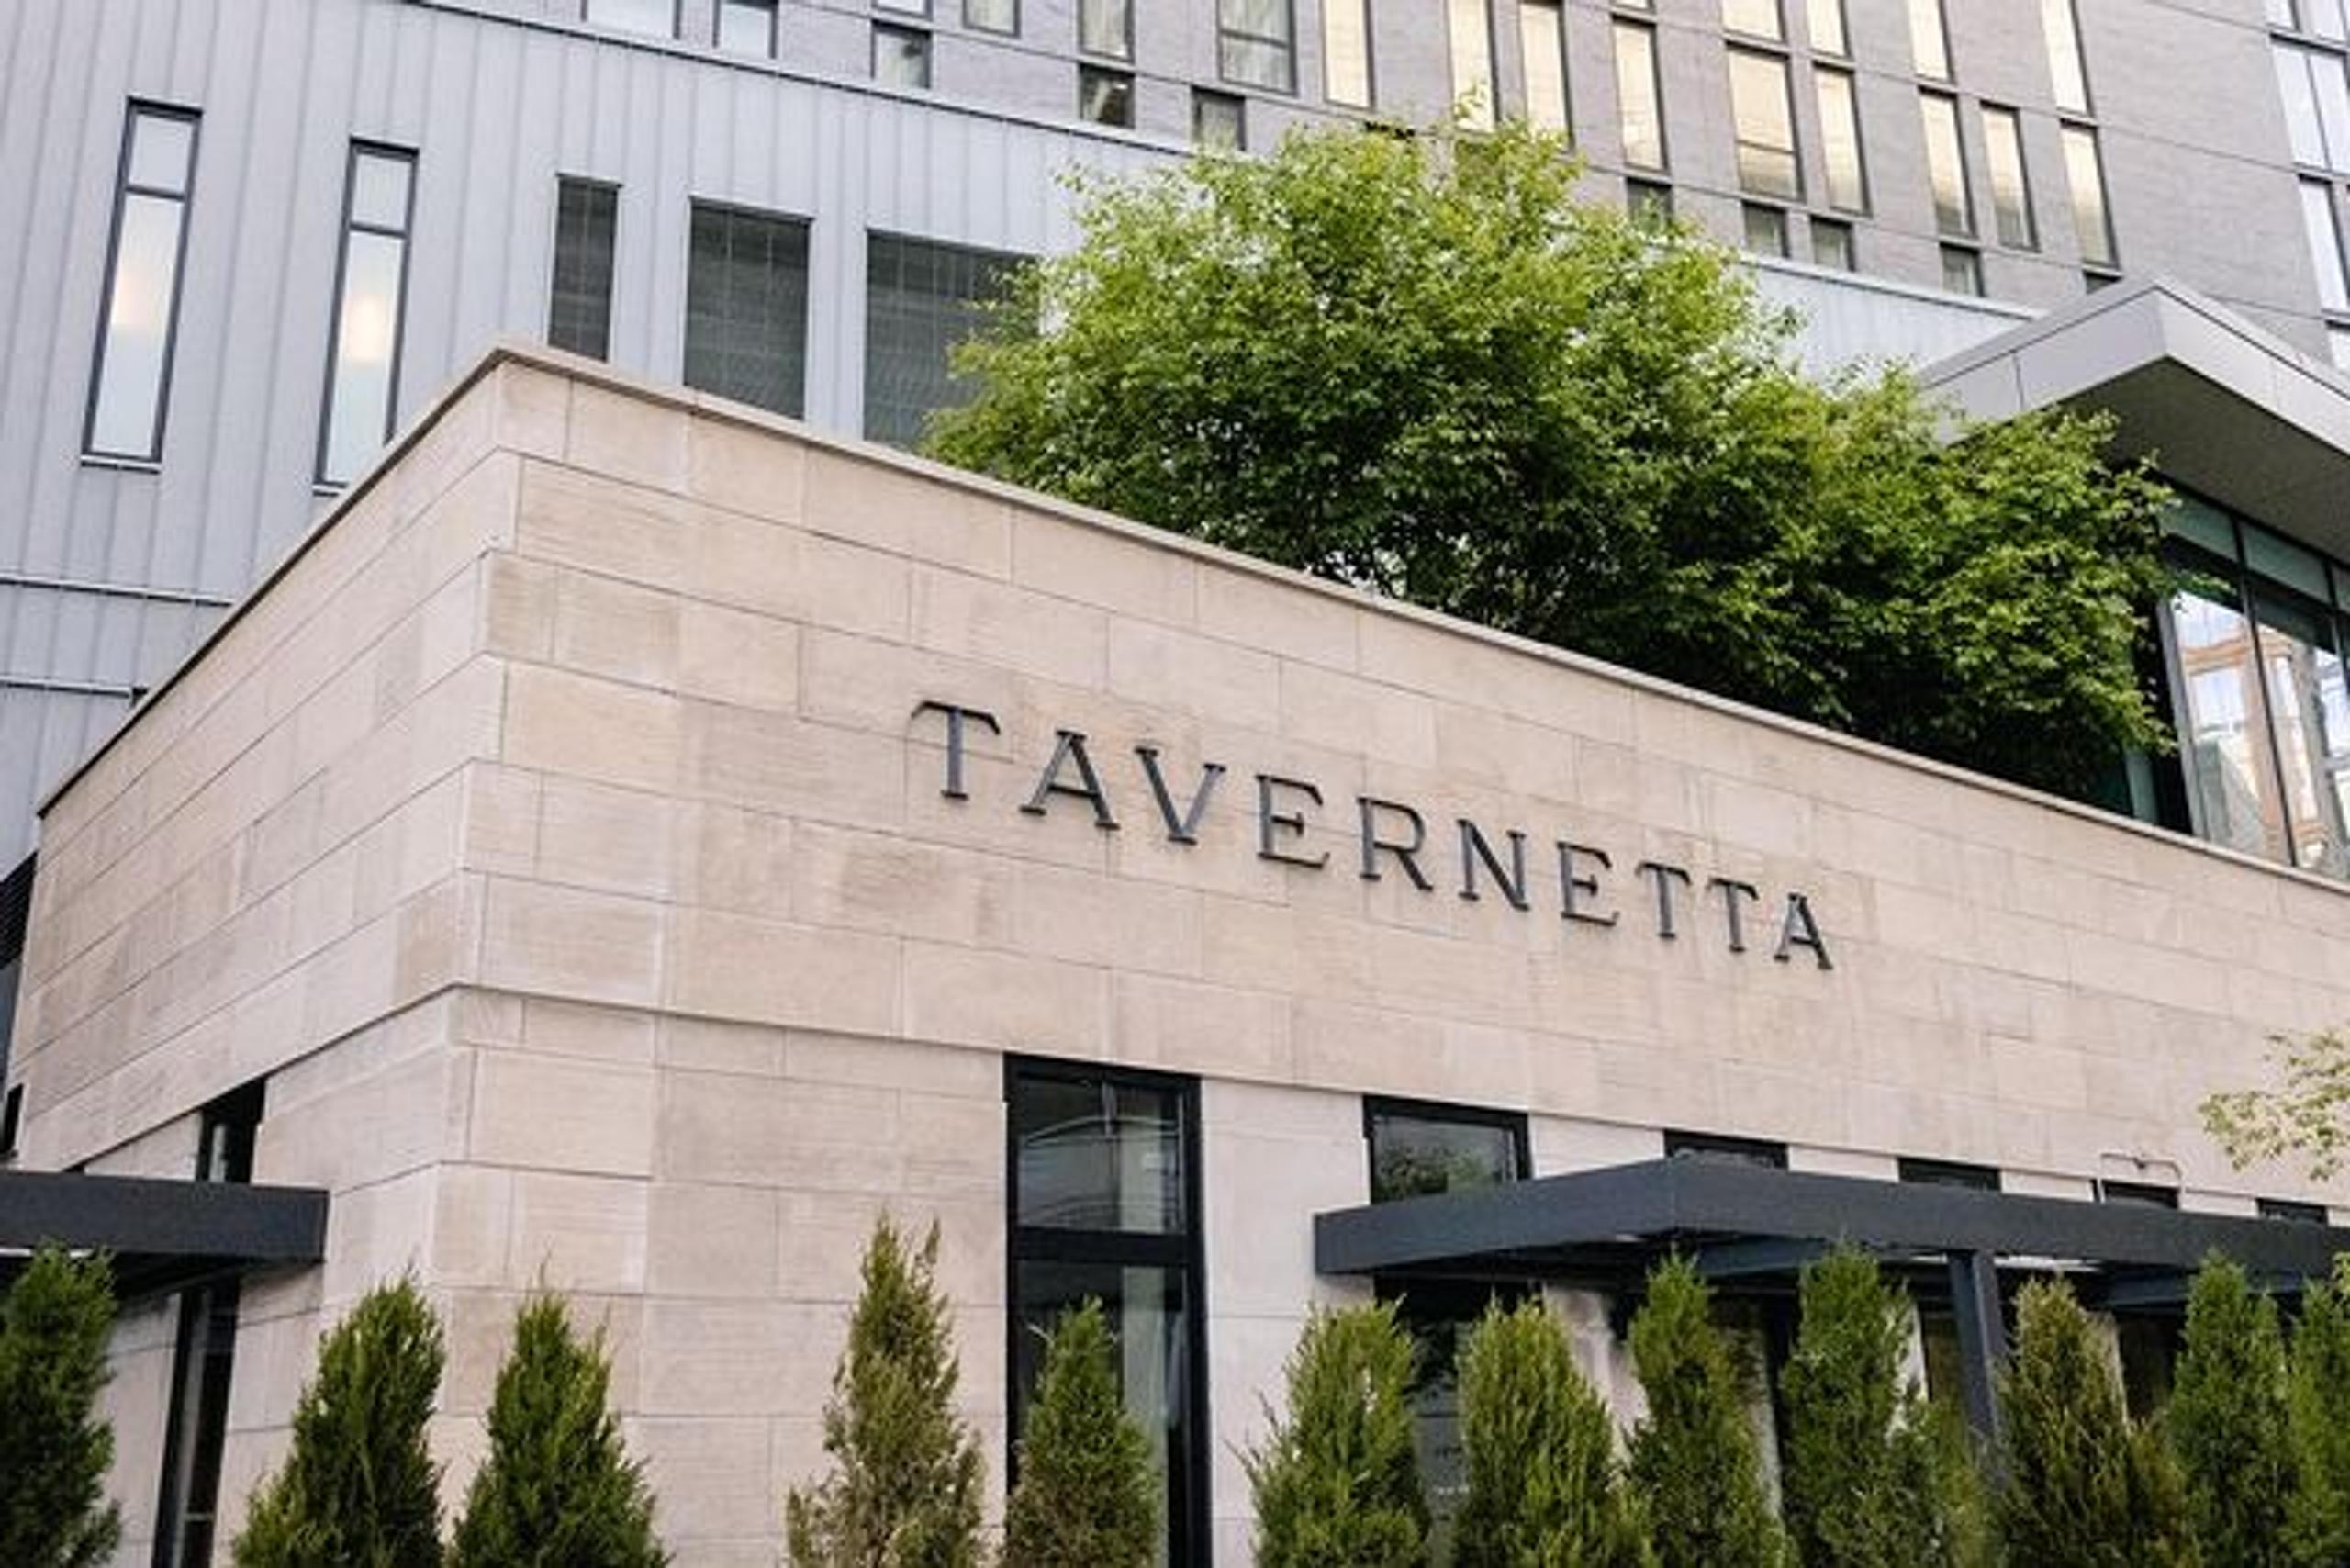 Exterior view of Tavernetta